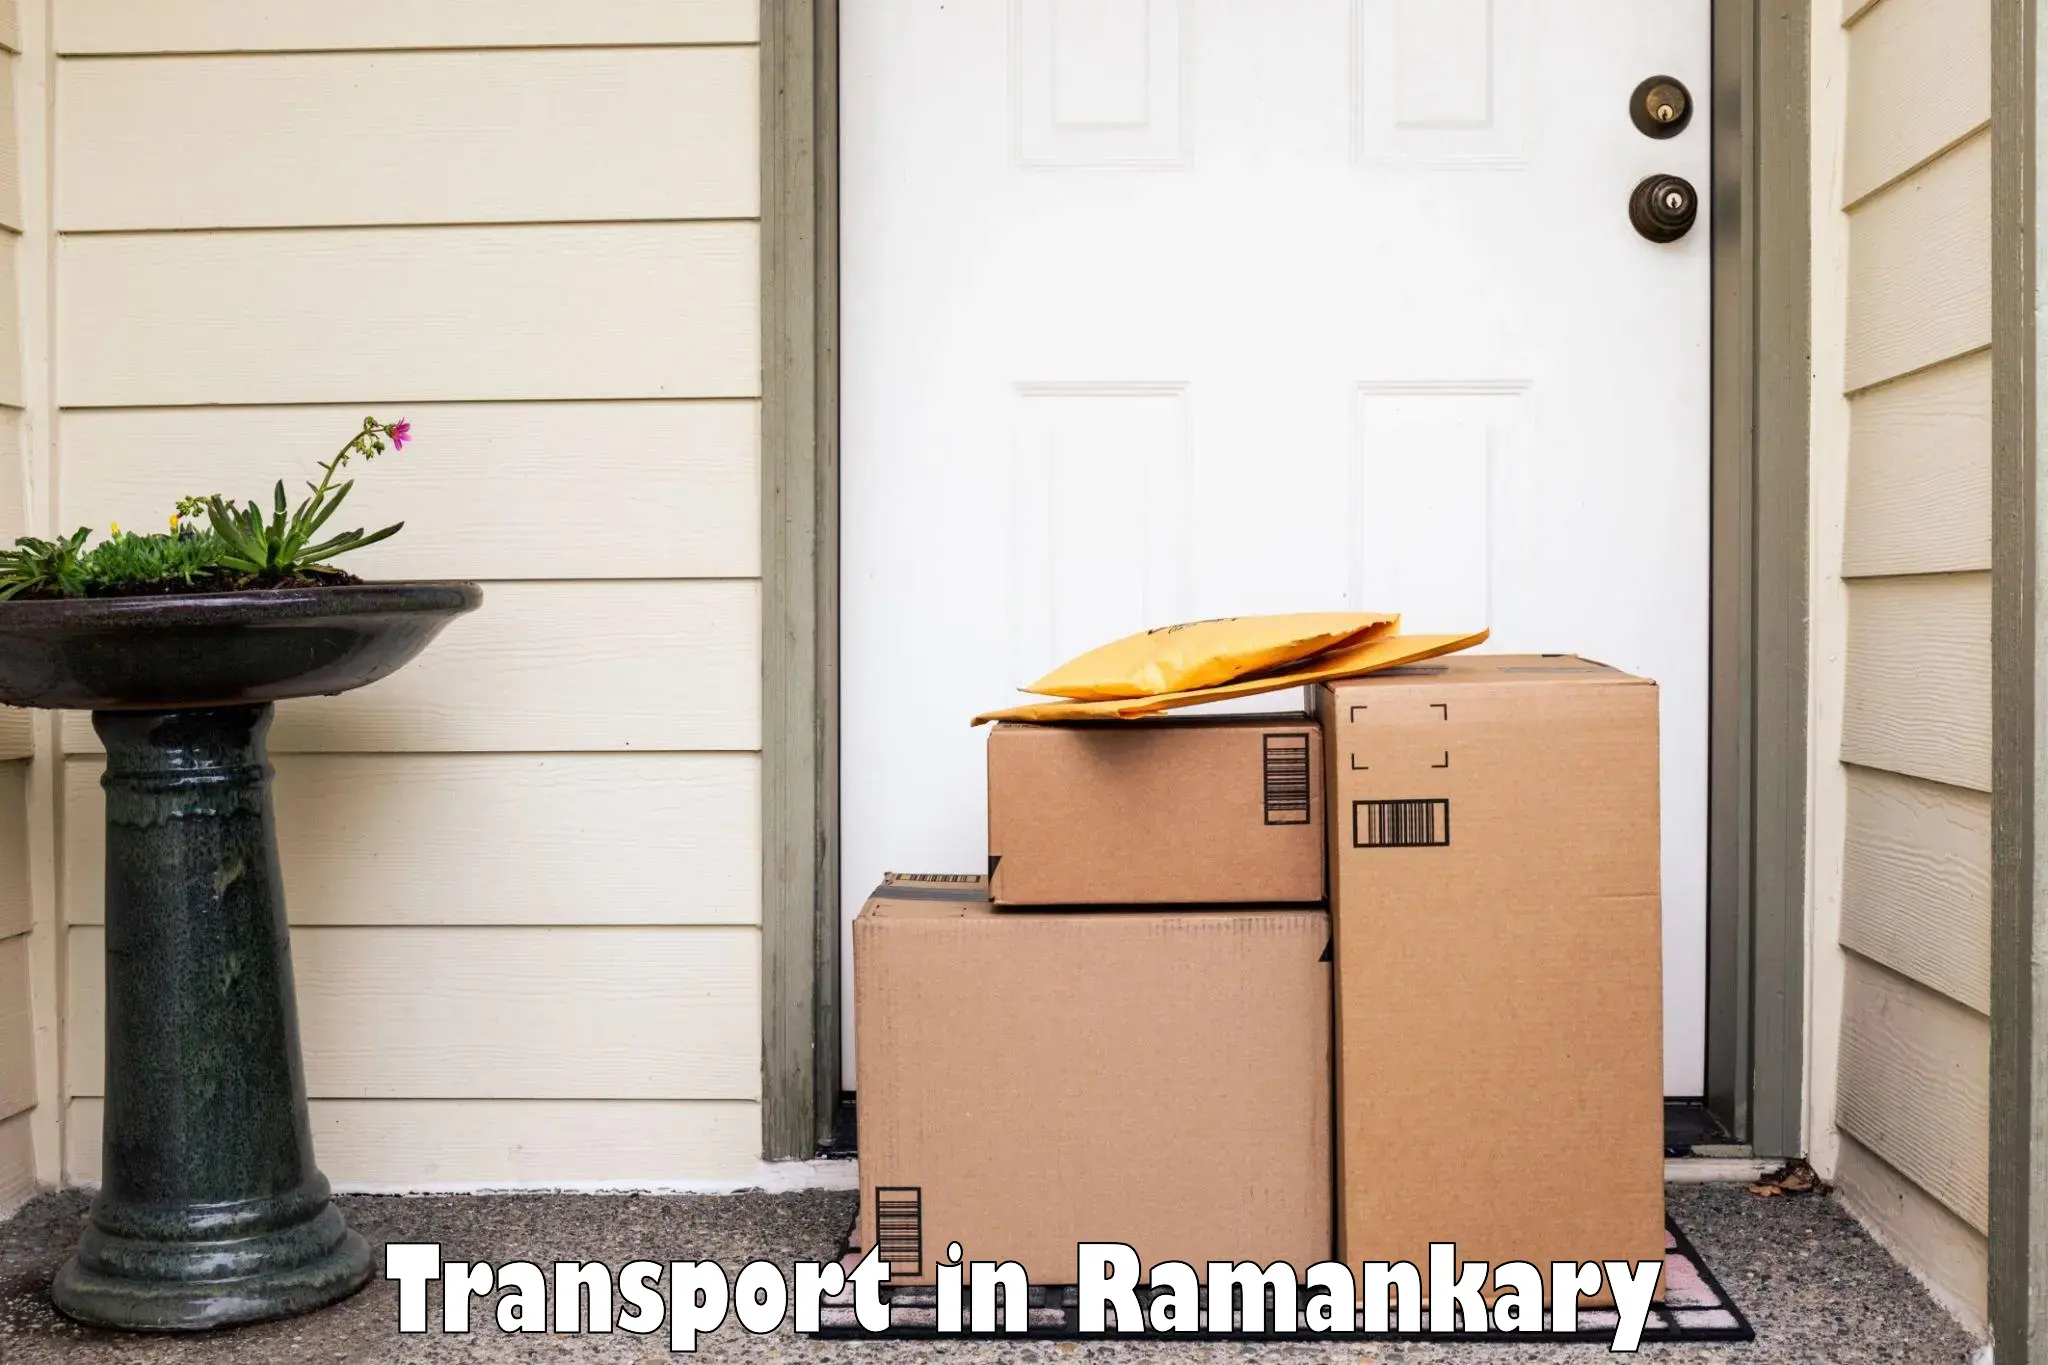 Transport in sharing in Ramankary